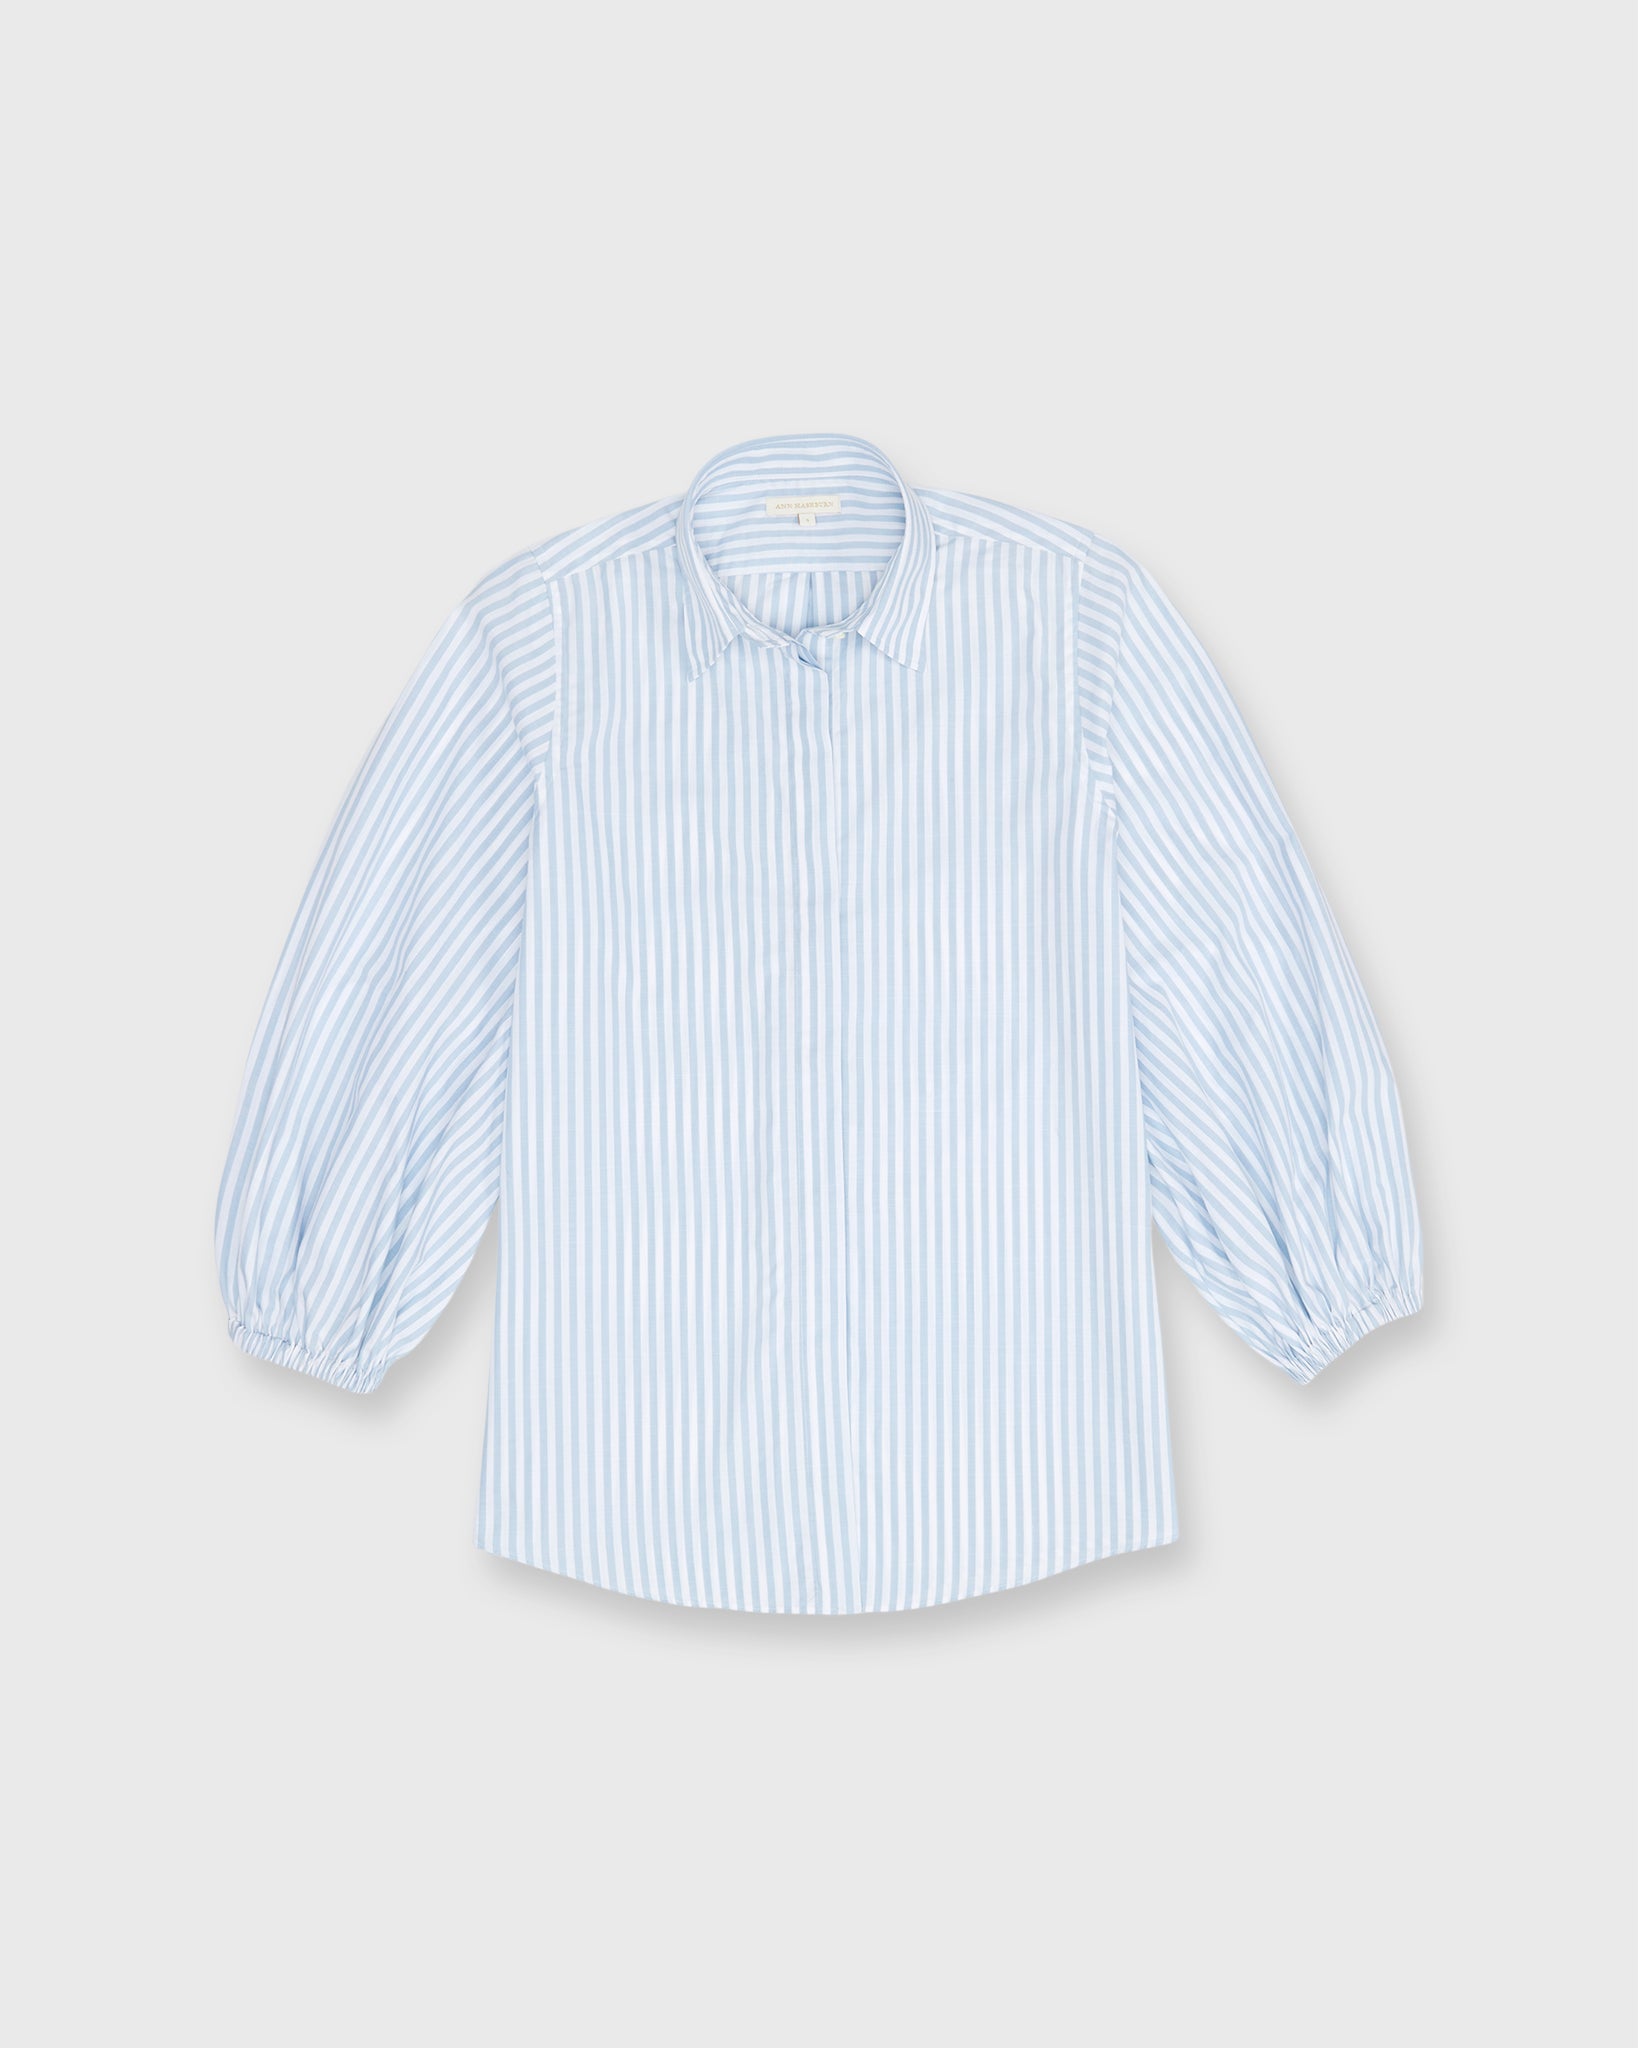 Isla Shirt in Steel Blue/White Stripe Chambray